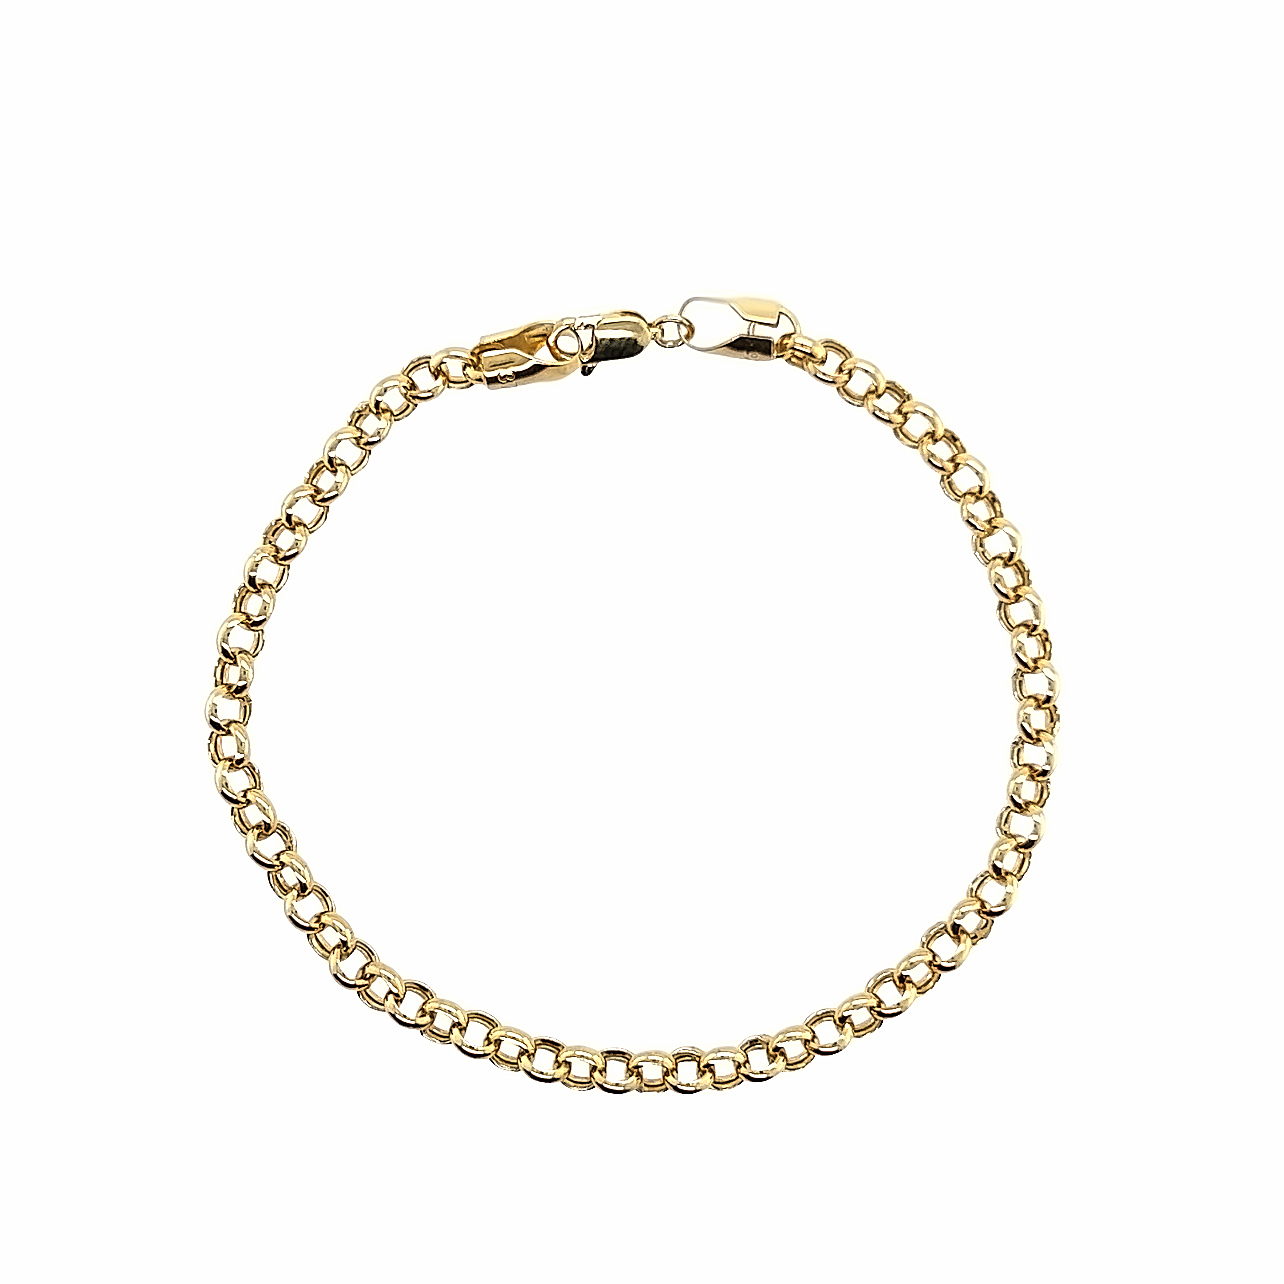 Hollow Oval Belcher Bracelet 19cm/7.5' 9ct Yellow Gold | eBay